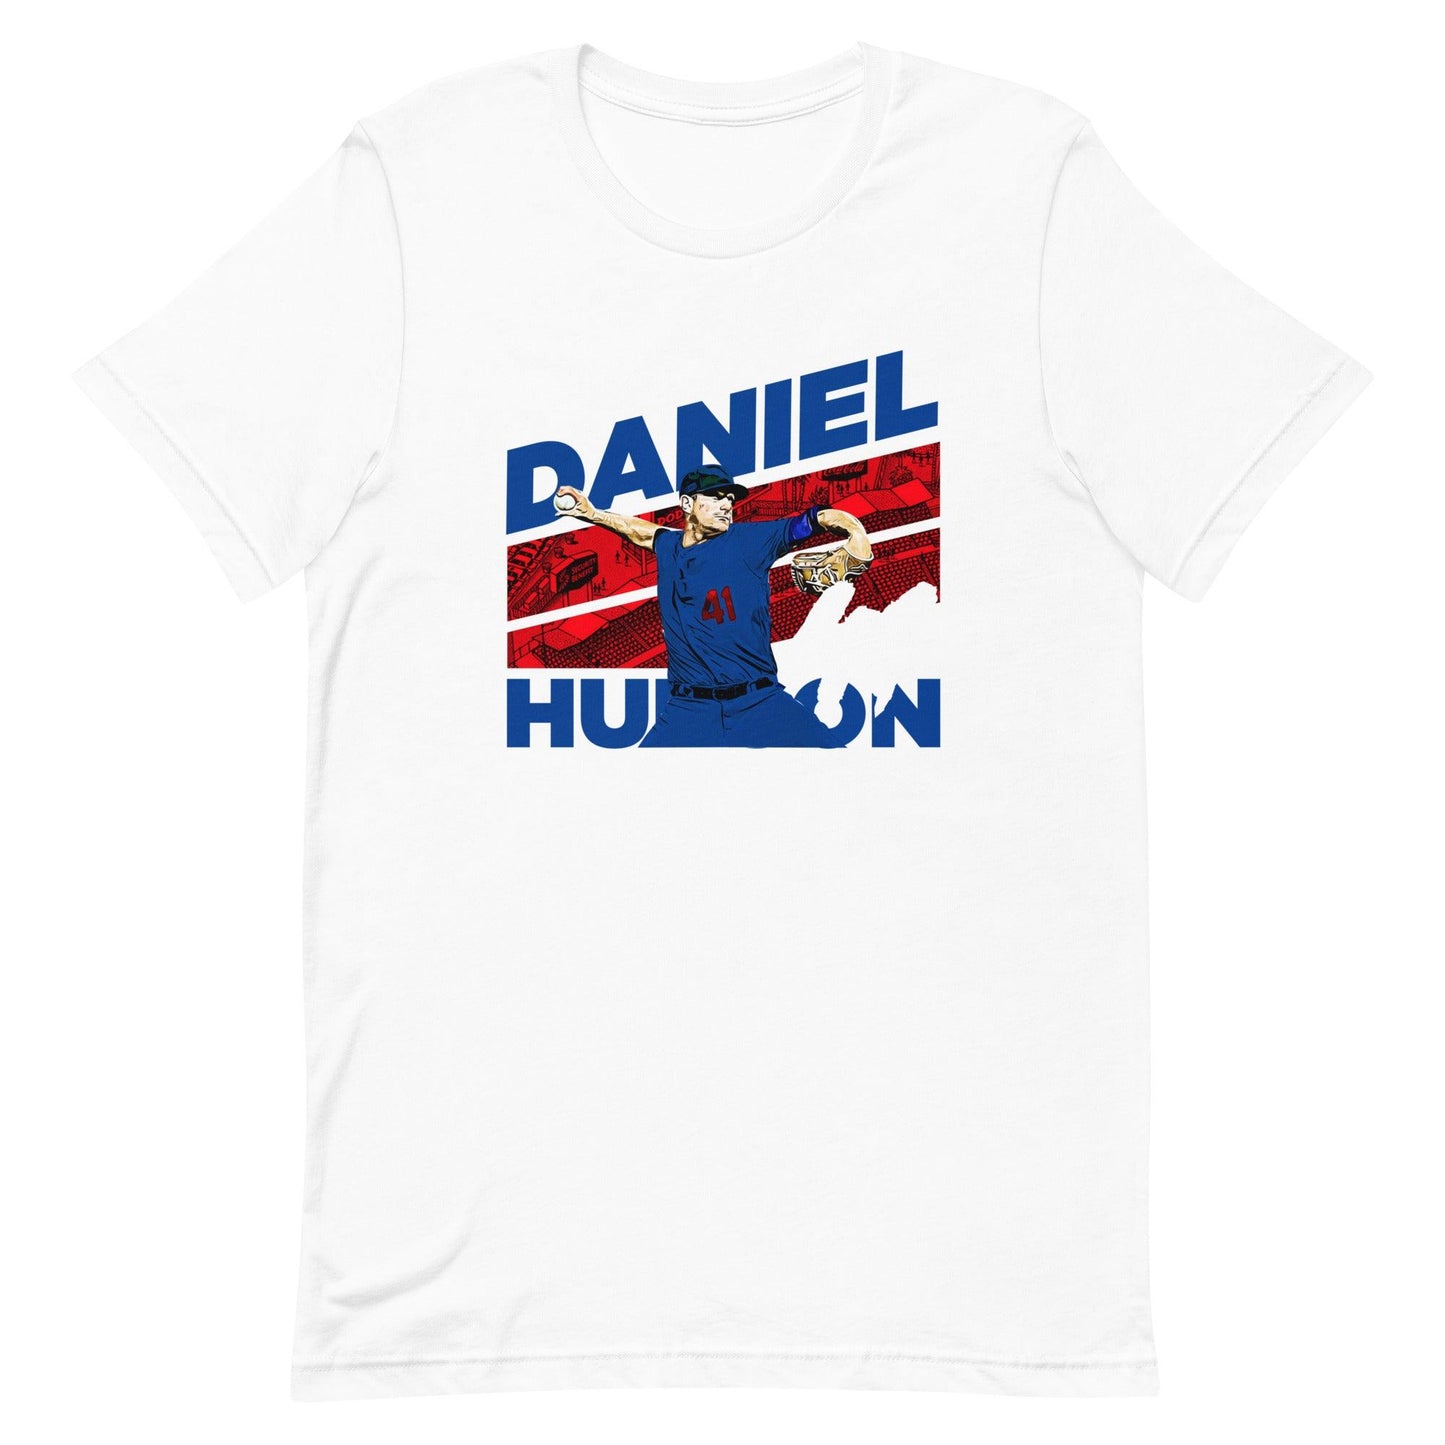 Daniel Hudson "Rotation" t-shirt - Fan Arch